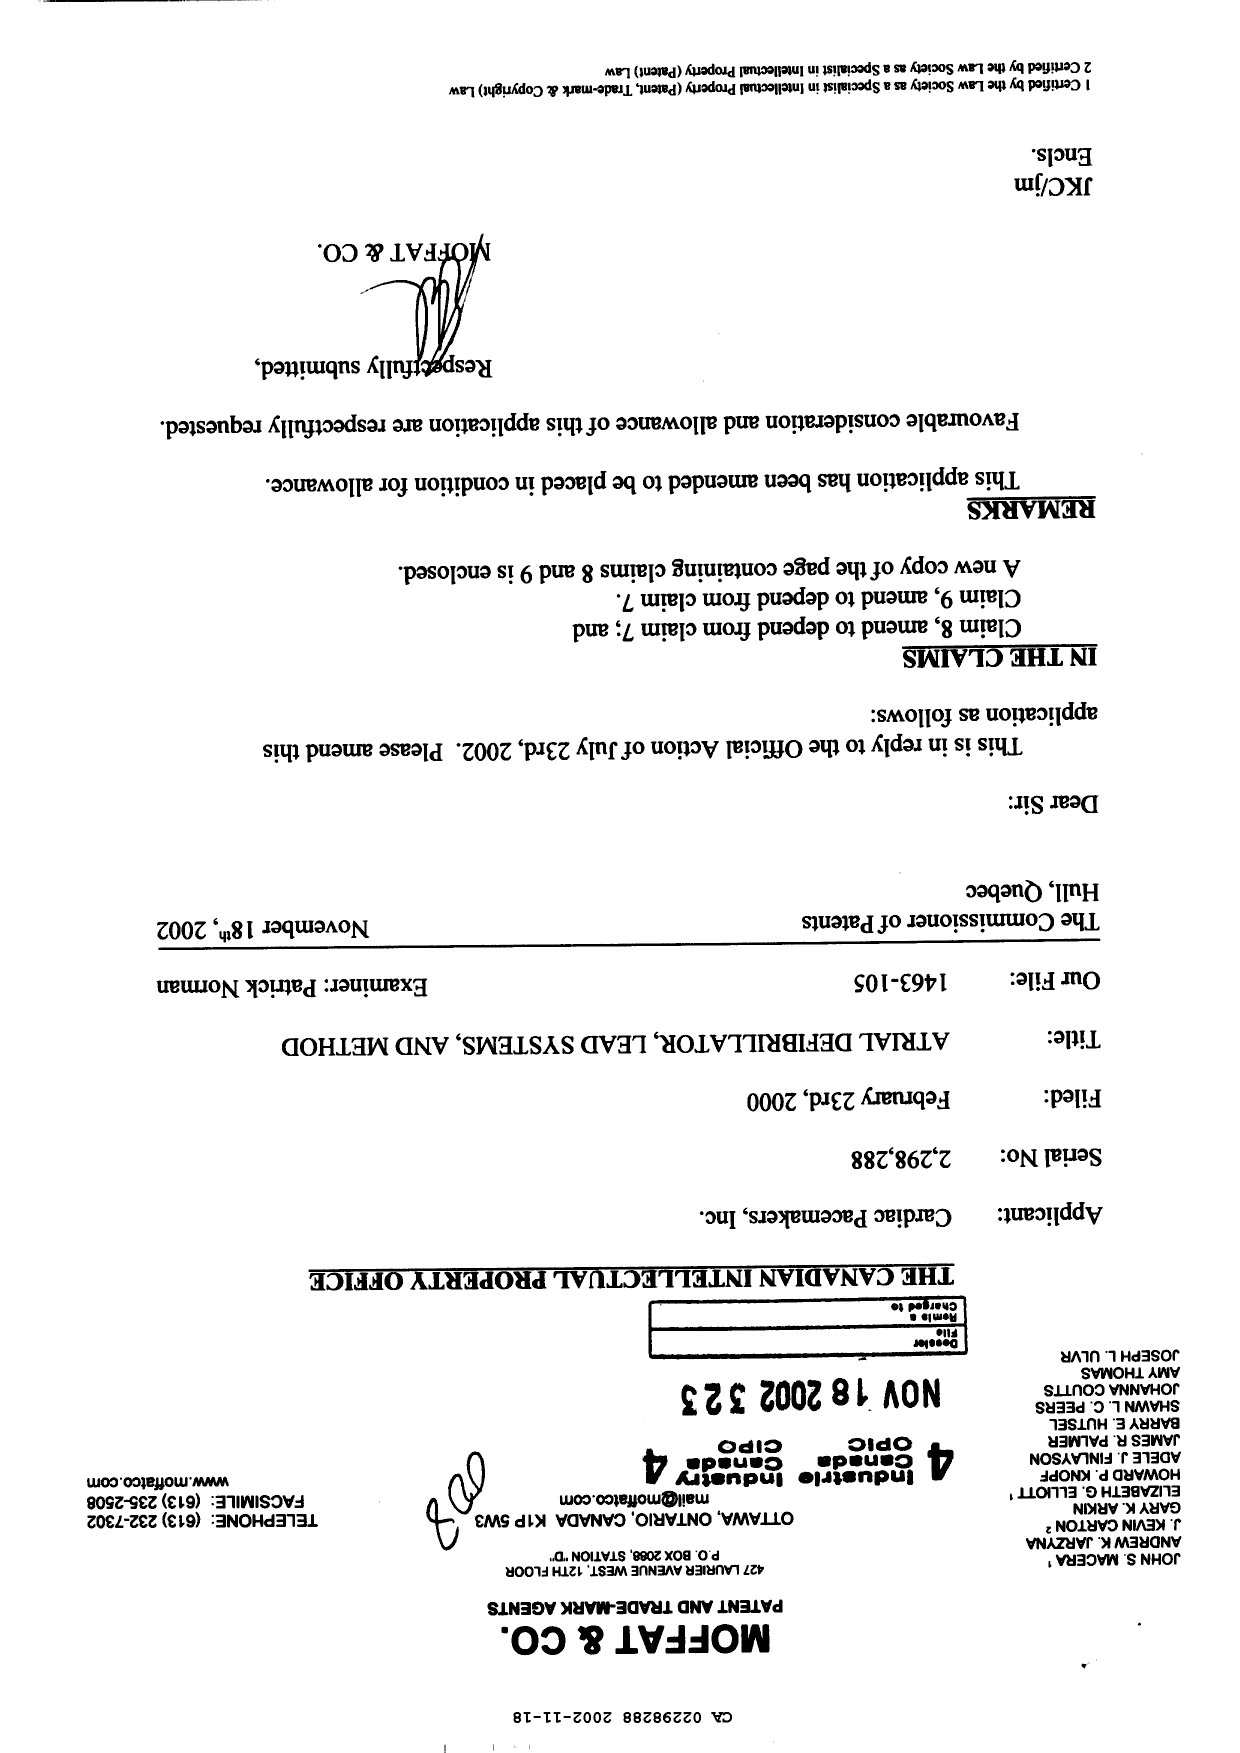 Canadian Patent Document 2298288. Prosecution-Amendment 20011218. Image 1 of 2